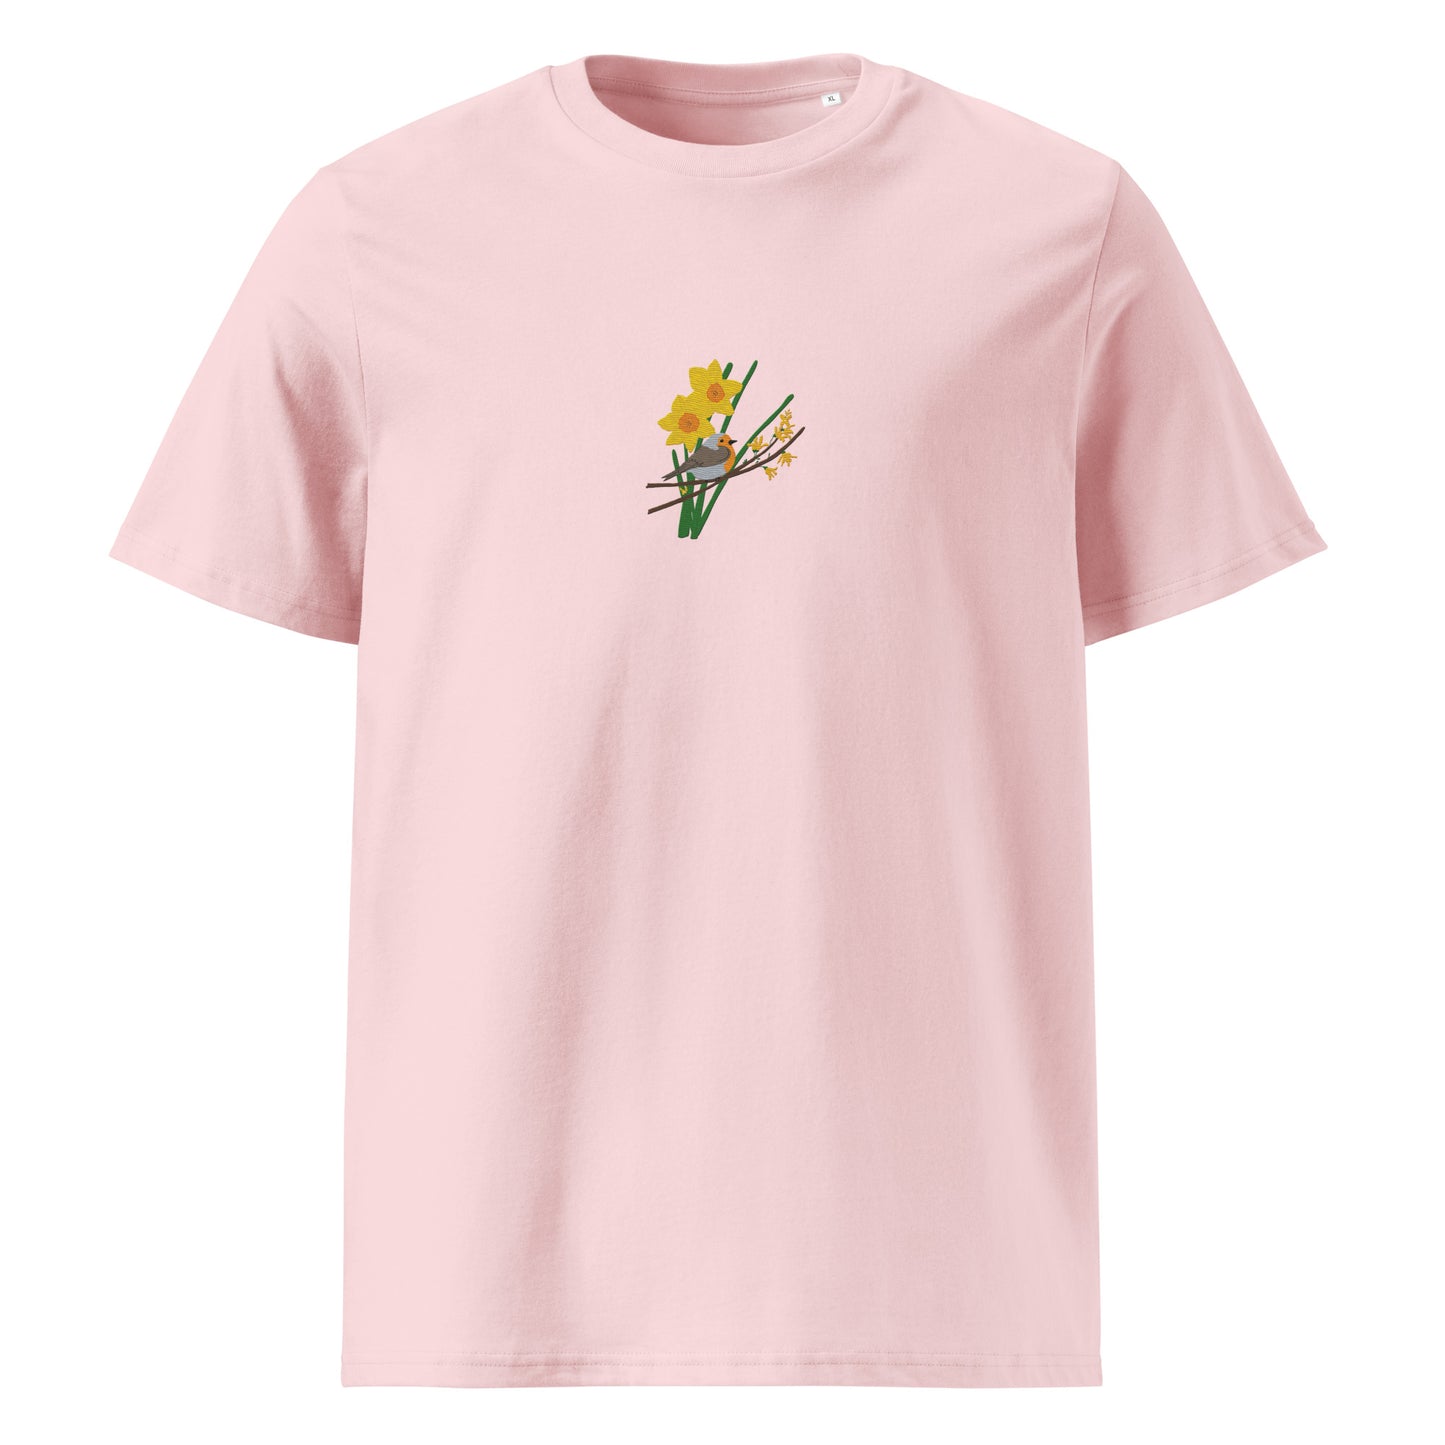 Robin and Daffodils - Unisex organic cotton t-shirt